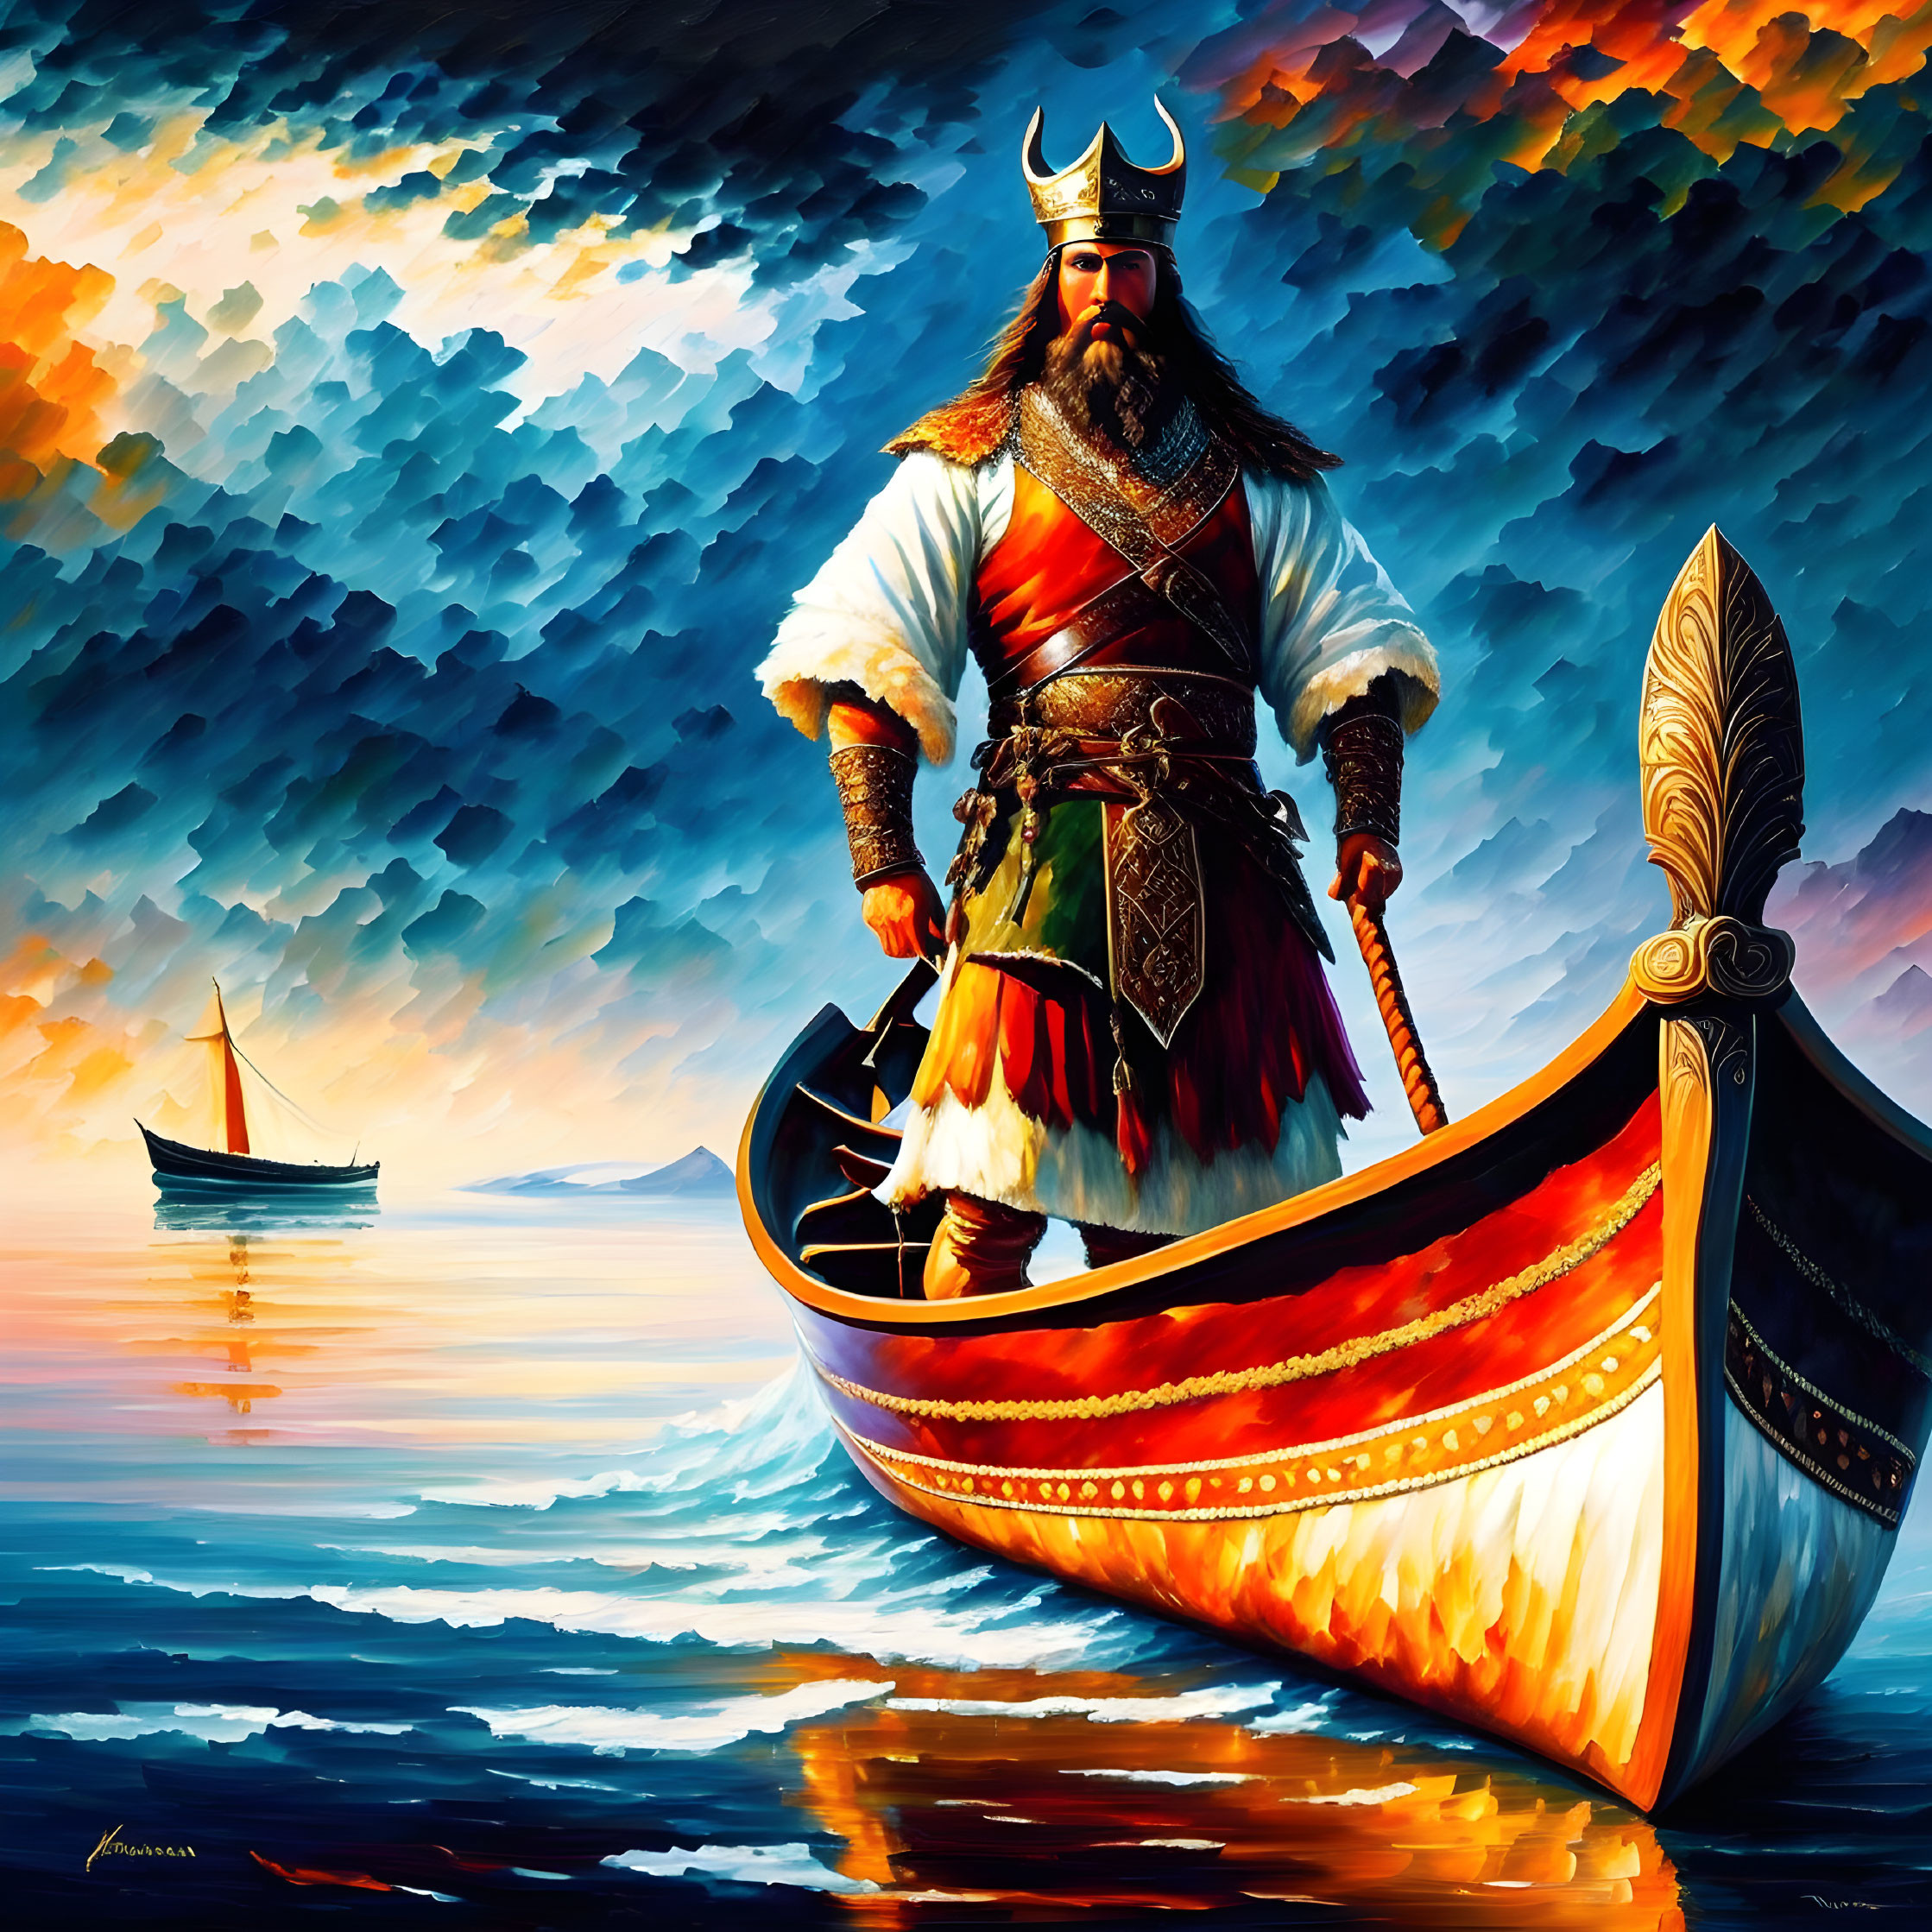 Viking arrives